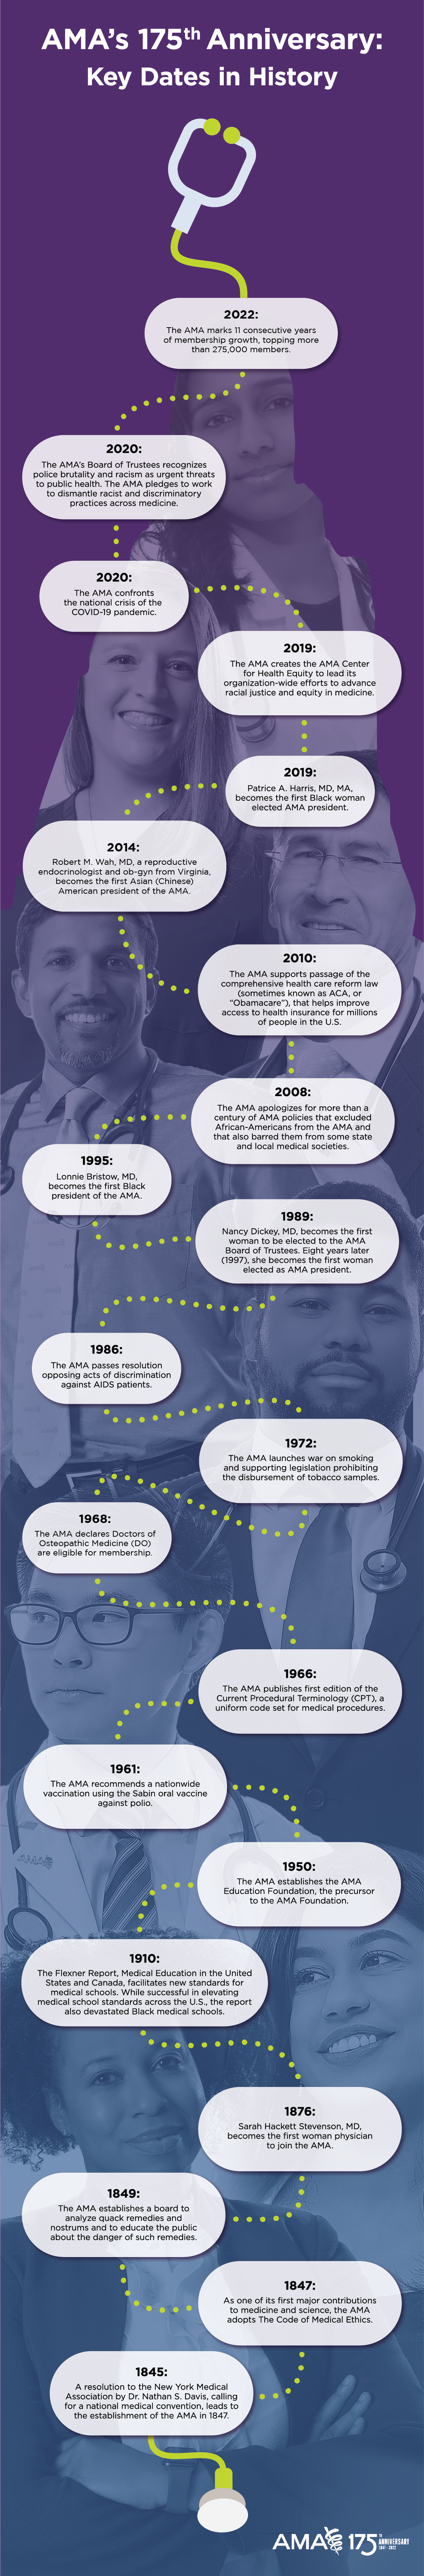 AMA 175th Anniversary infographic updated